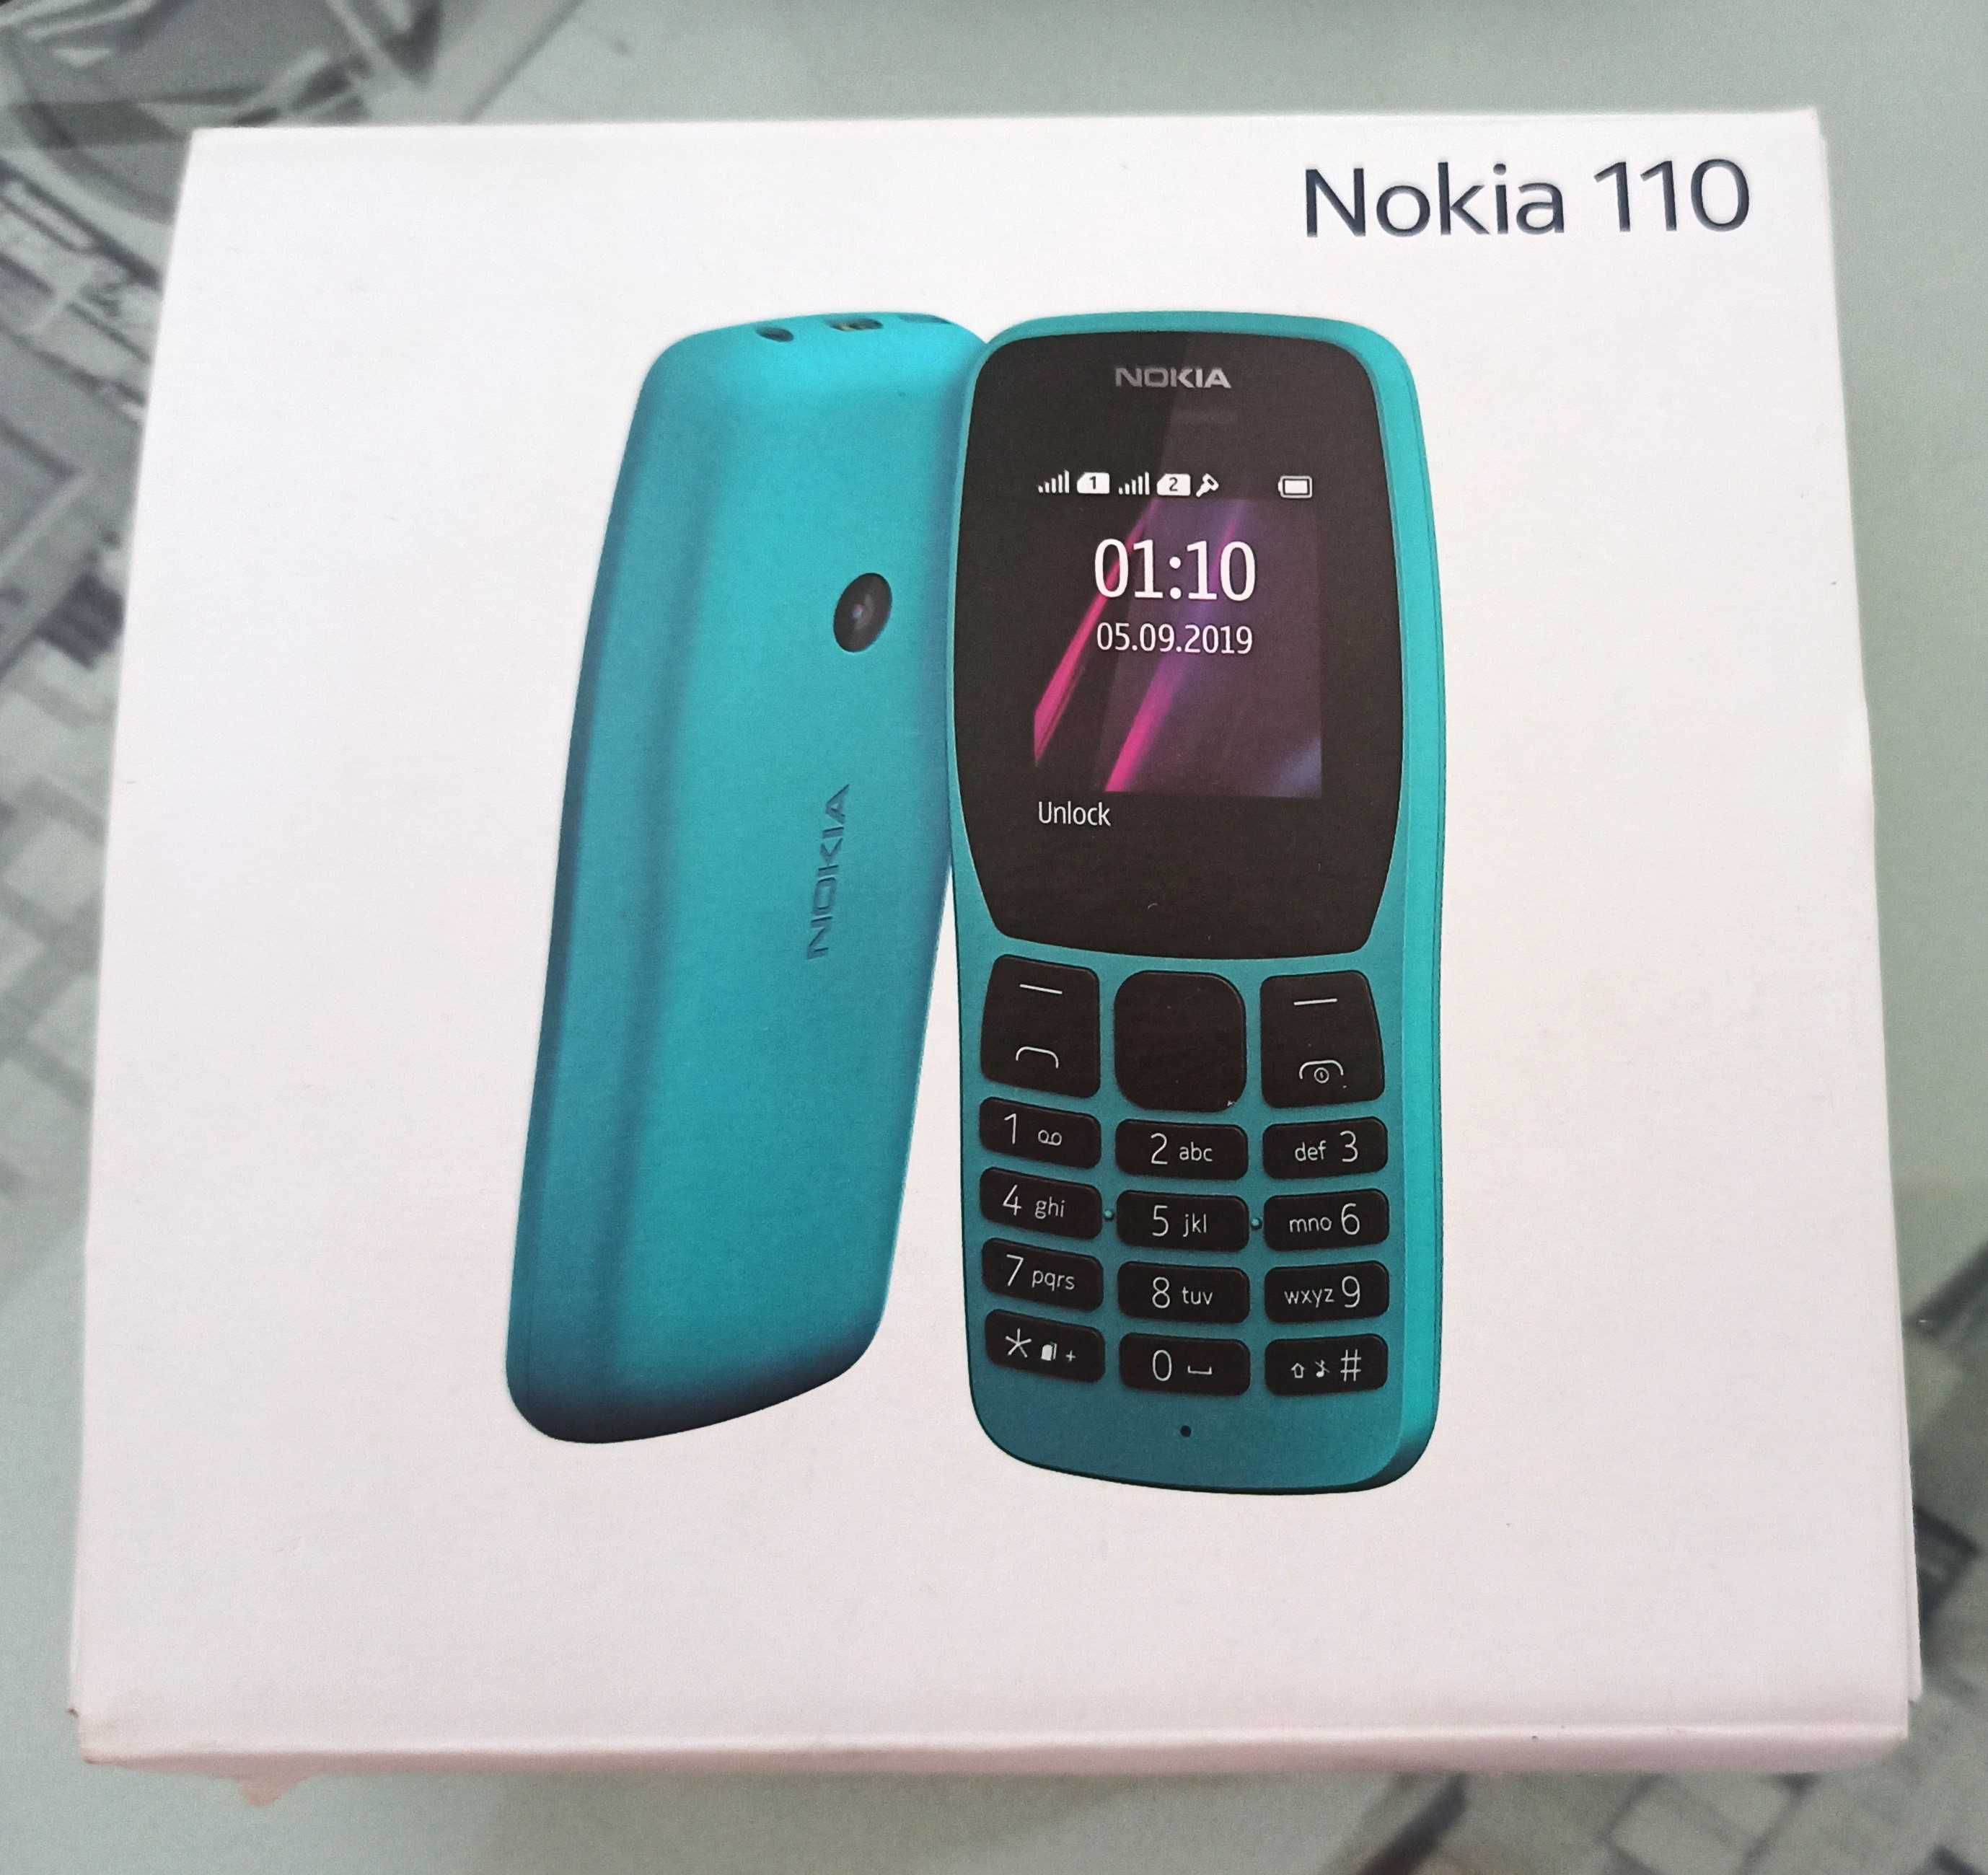 Telemovel Nokia 110 novo